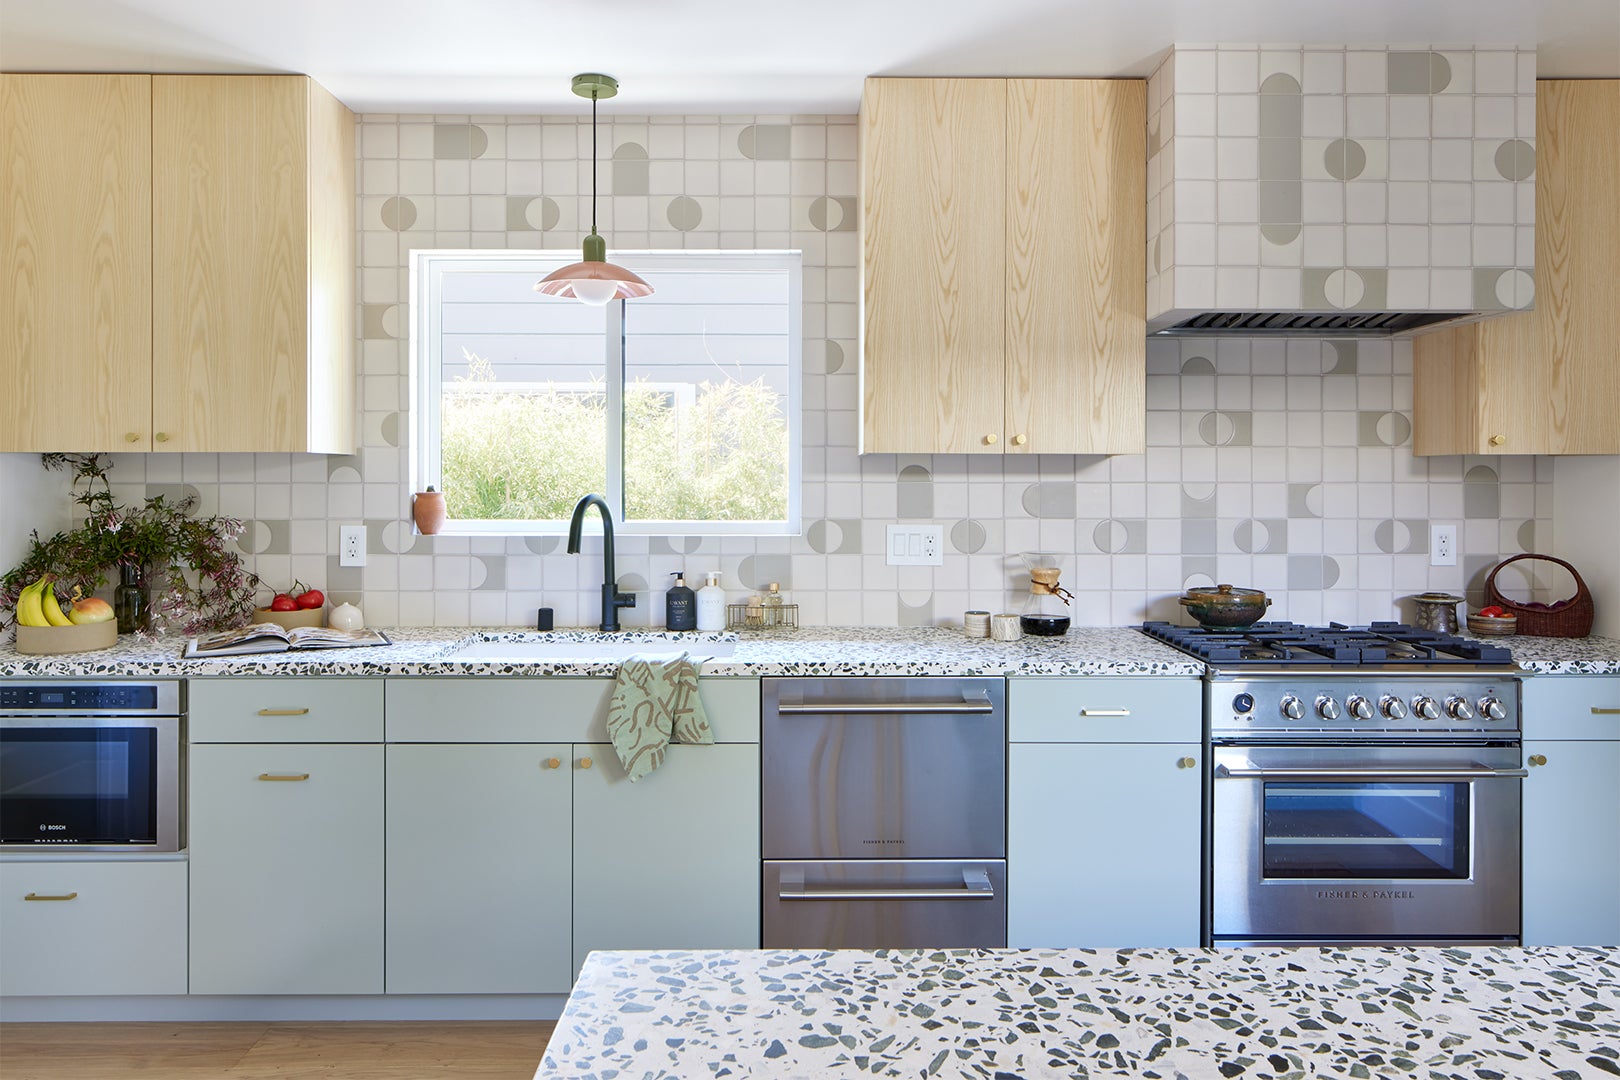 galley kitchen with graphic backsplash tile